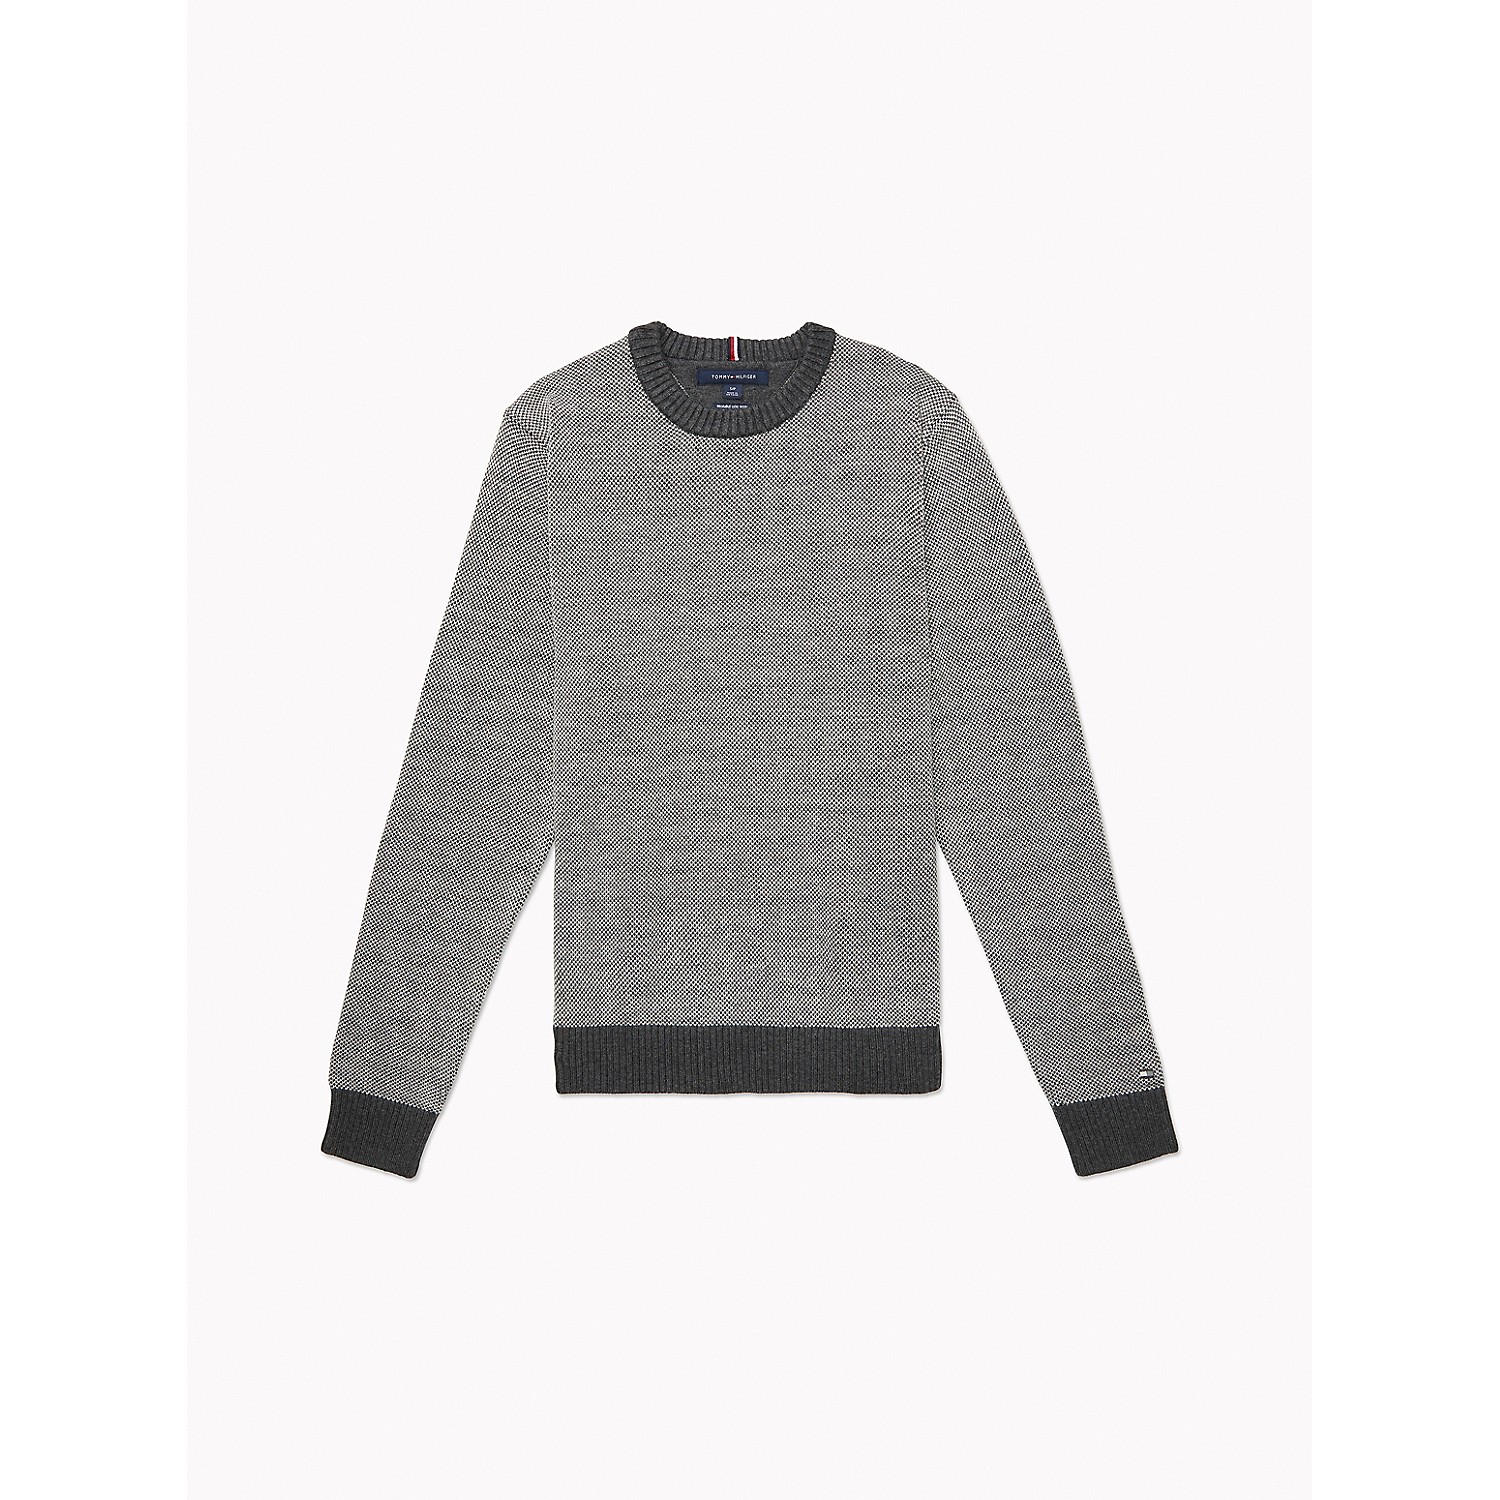 TOMMY HILFIGER Essential Contrast Trim Sweater